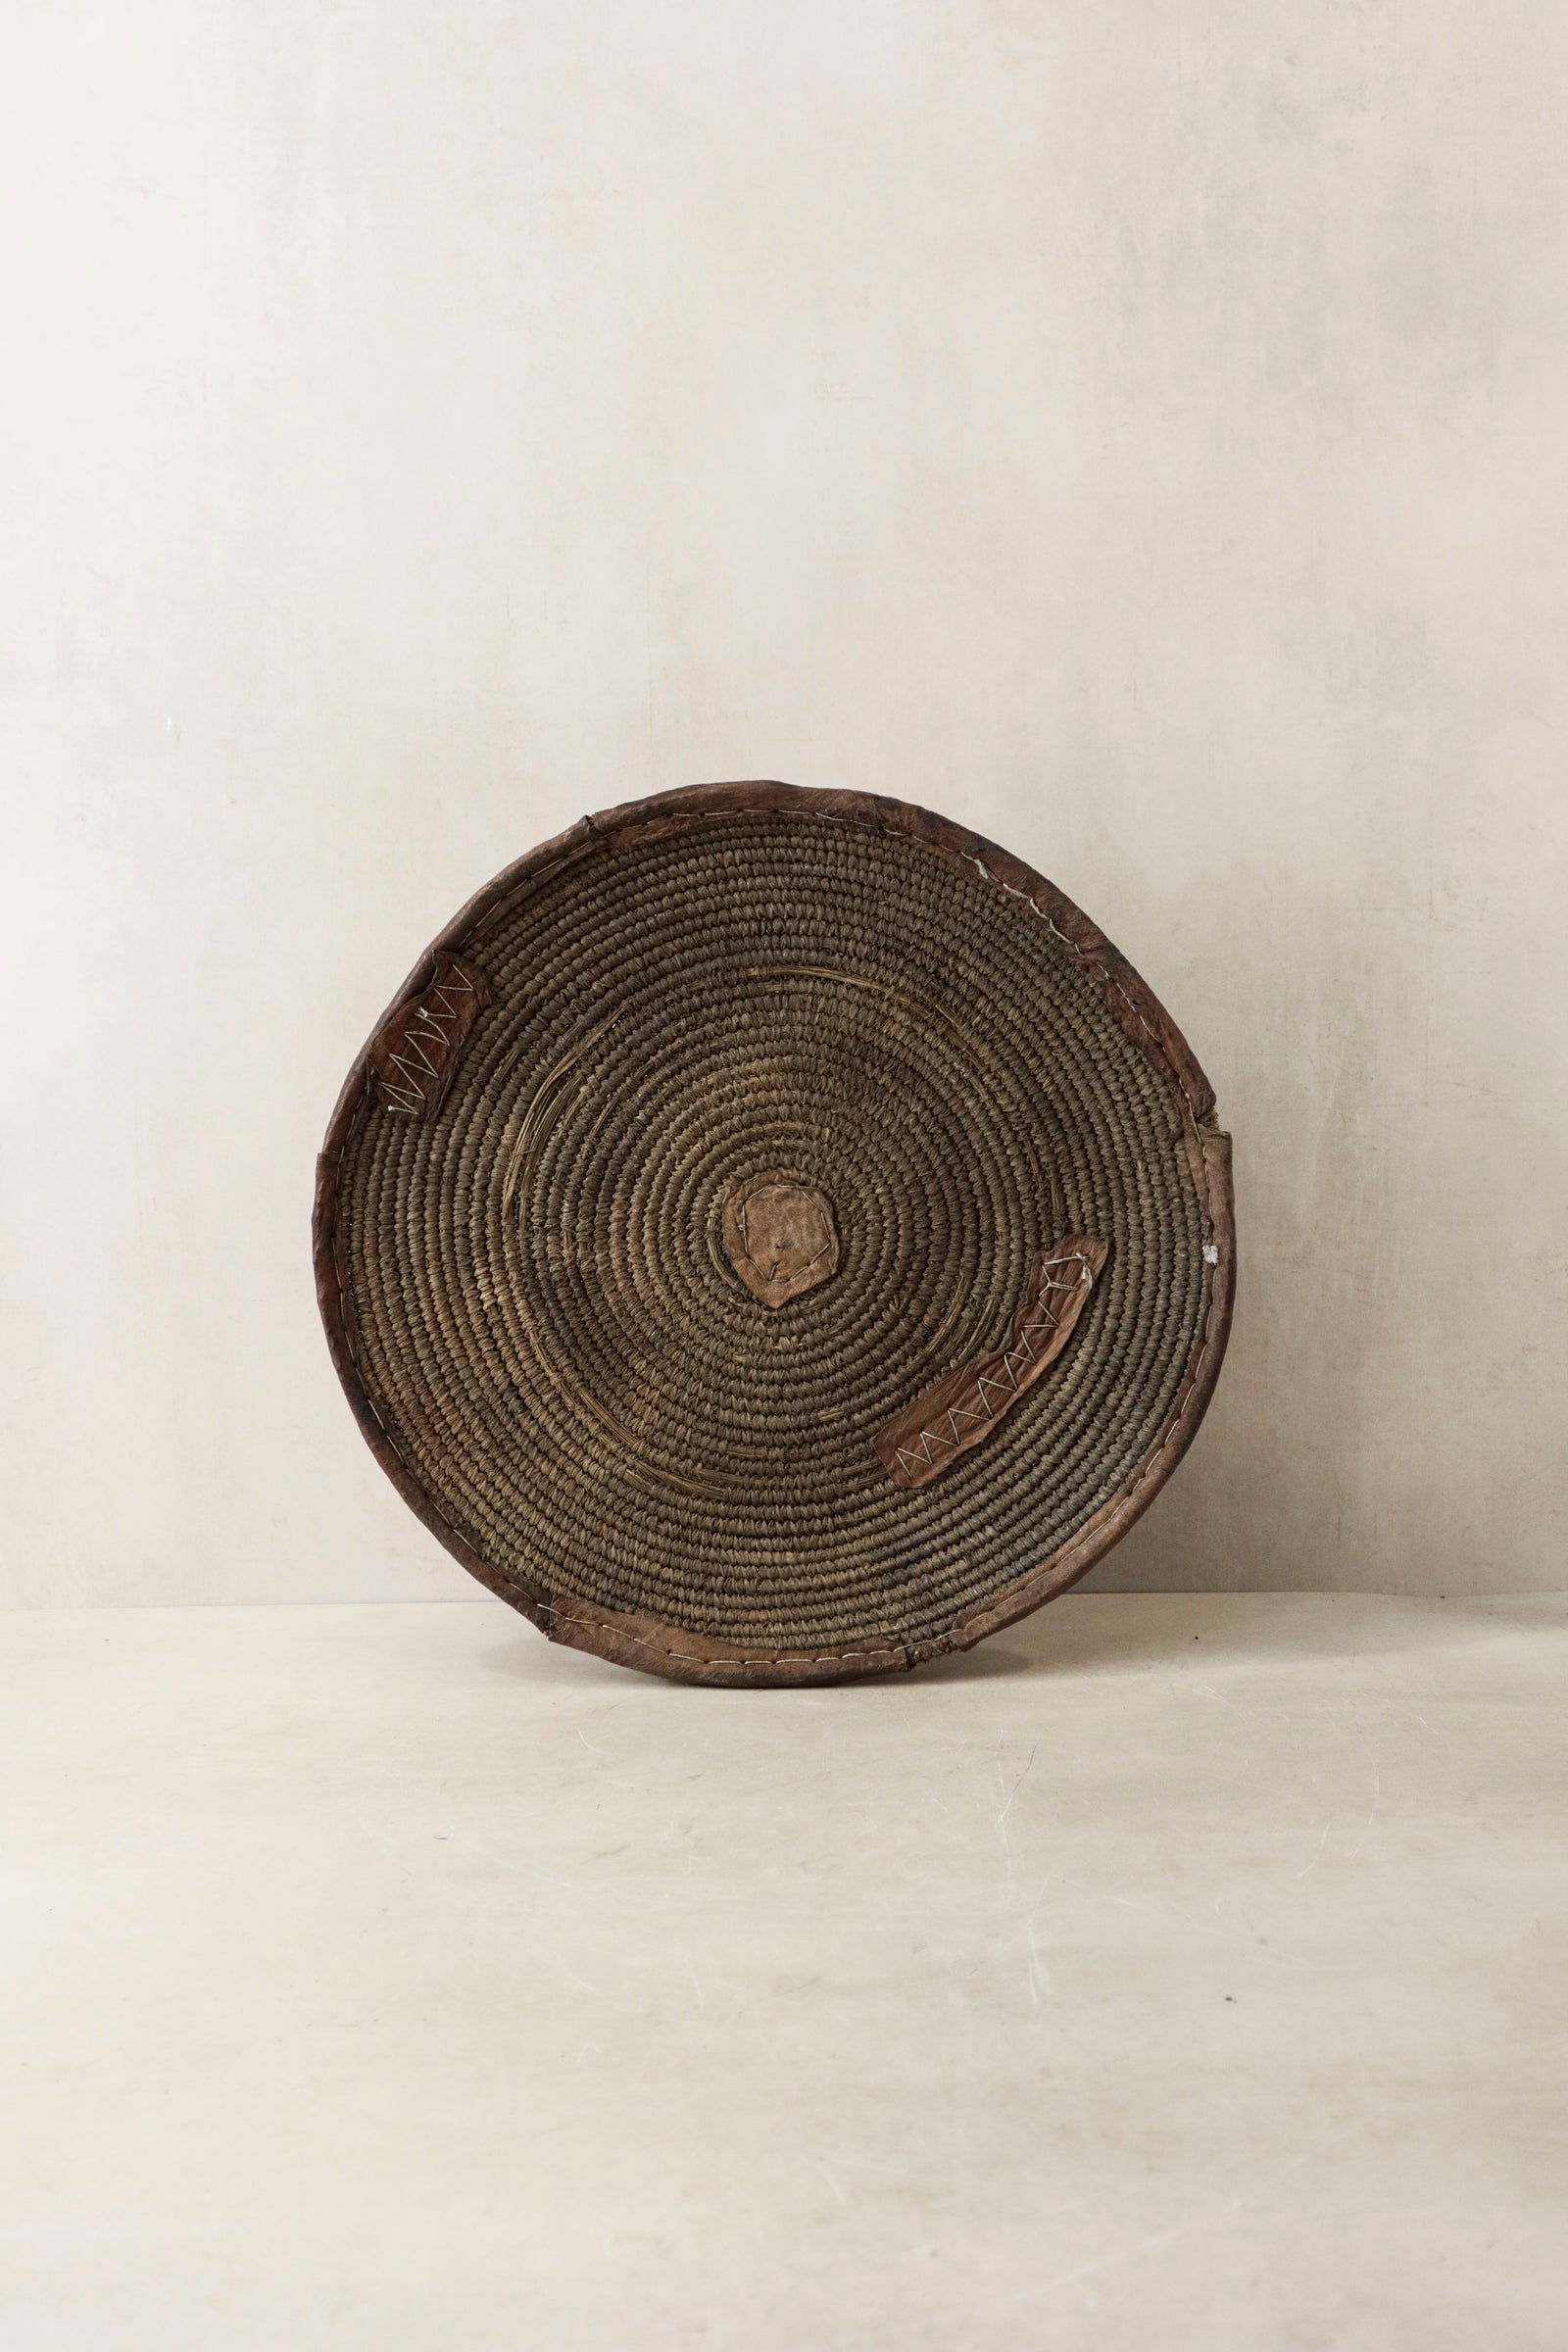 Handwoven Wall Basket - Chad - 41.6